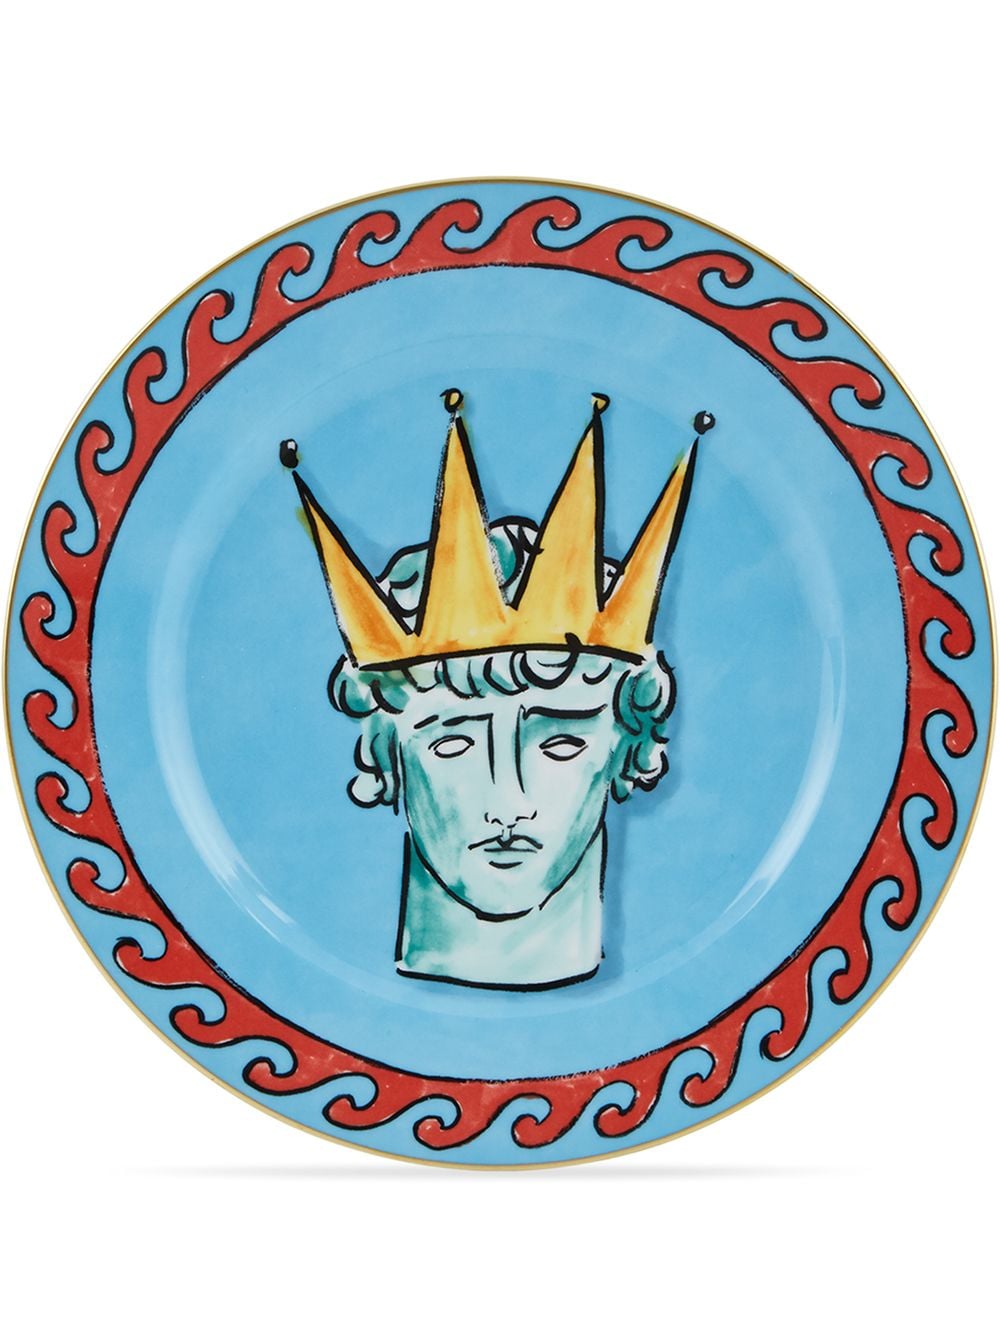 GINORI 1735 Viaggio di Nettuno porcelain dinner plates (set of two) - Blue von GINORI 1735